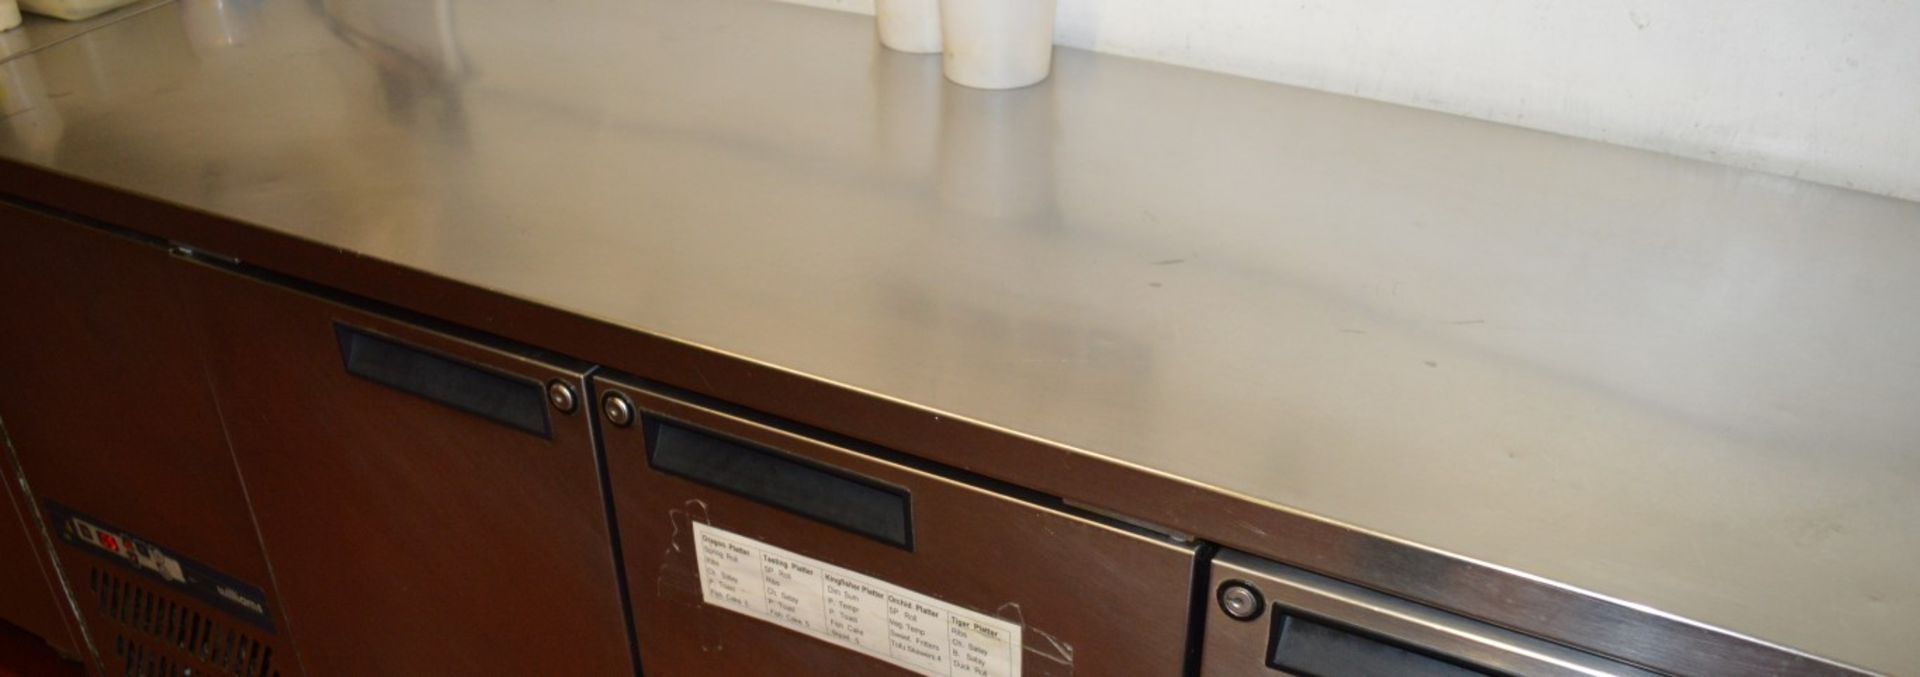 1 x Williams Catering Three Door Countertop Chiller - Commercial Kitchen Equipment - CL105 - Ref - Image 3 of 5